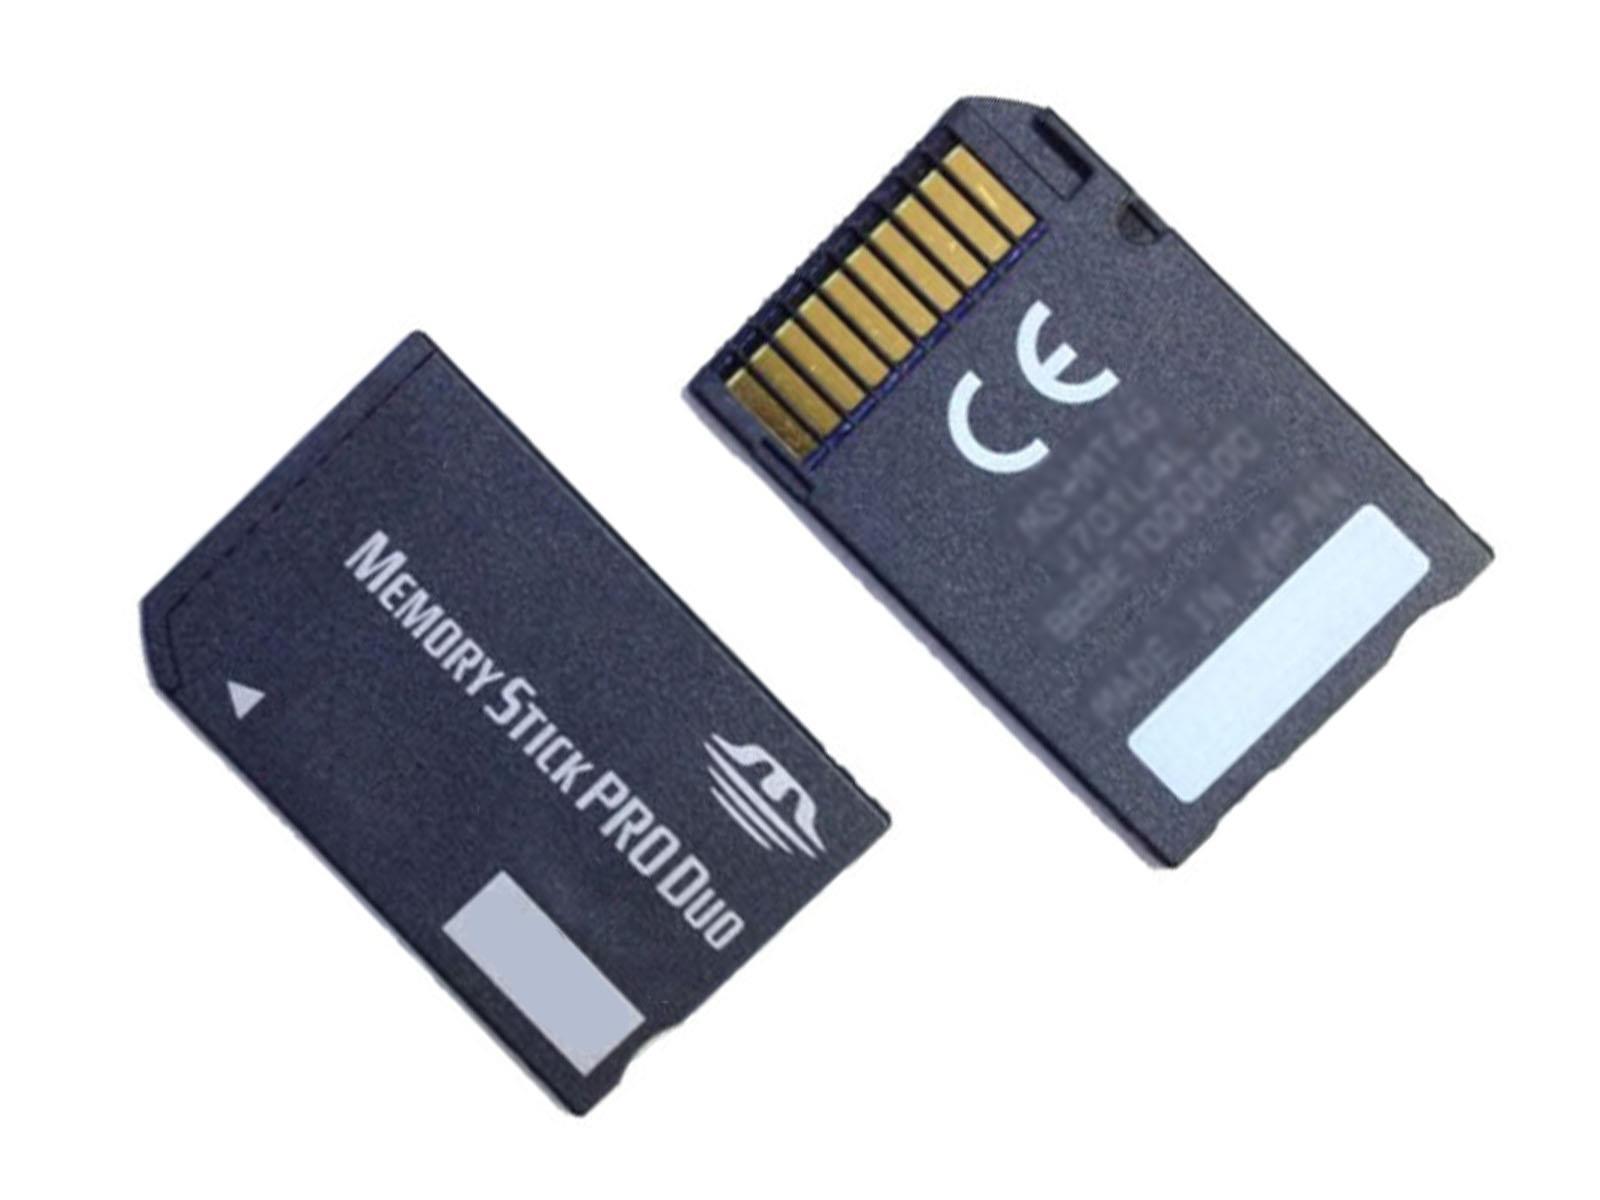 2GB MS Pro Card